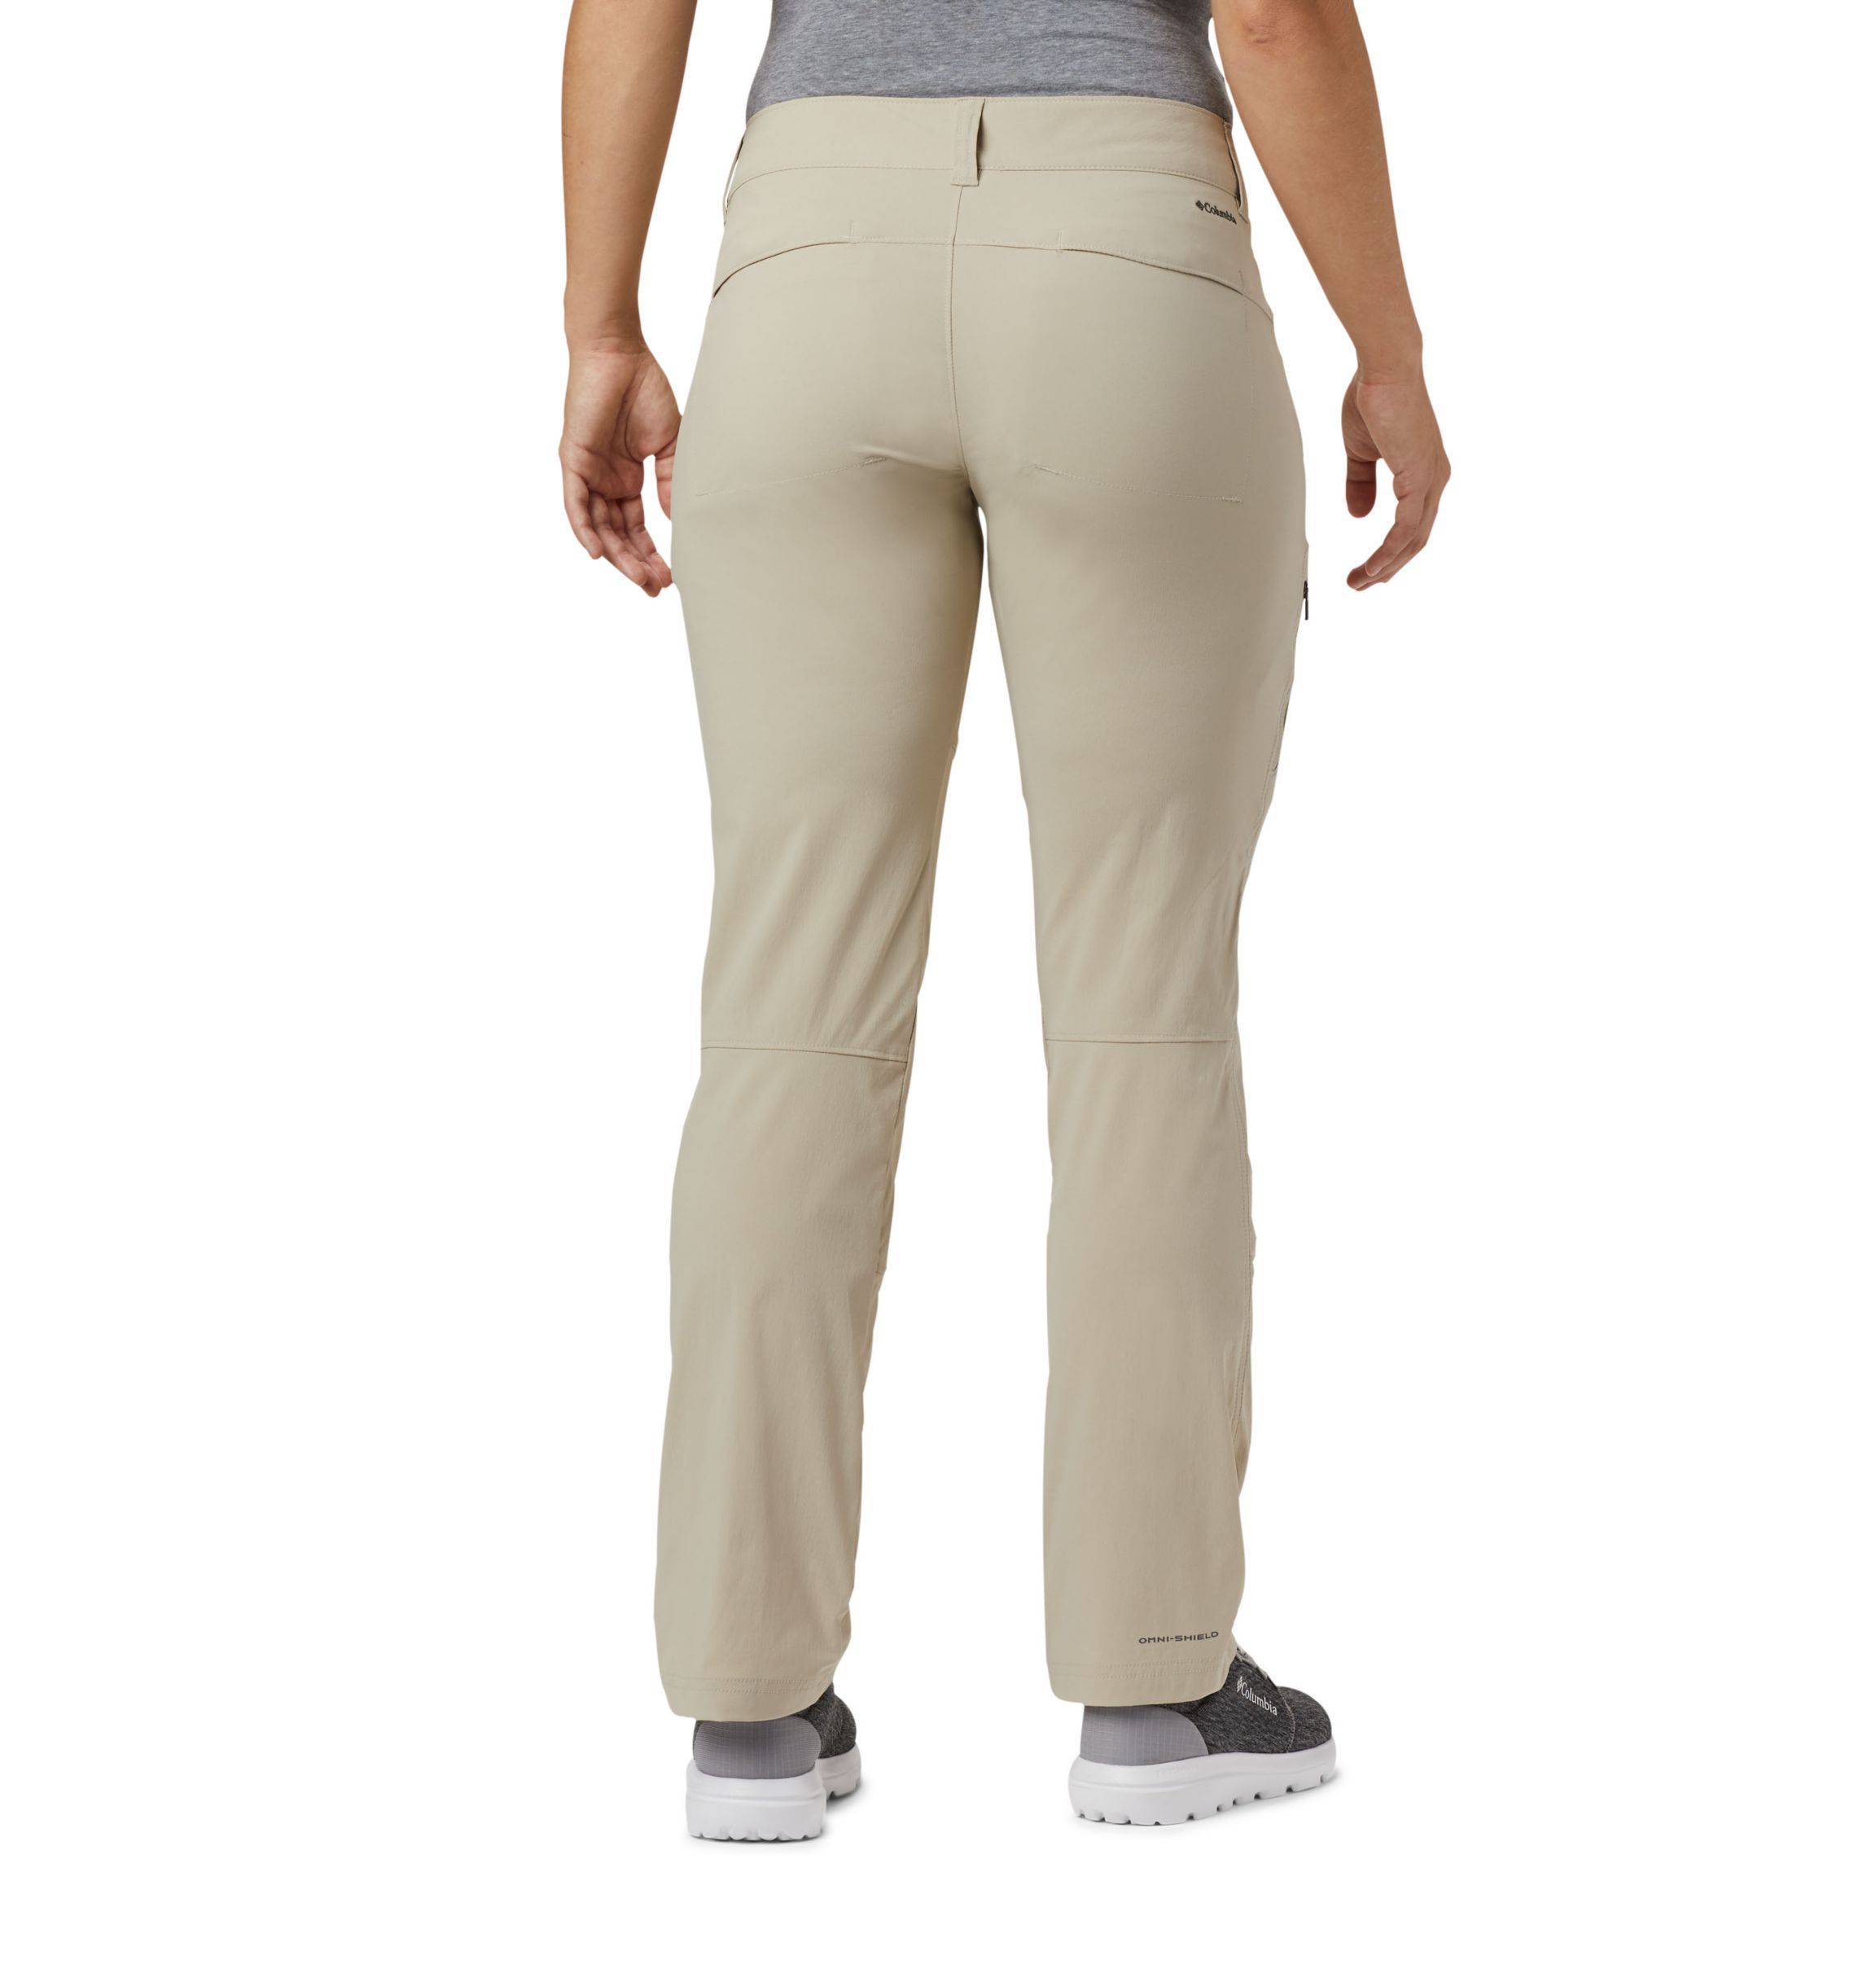 Columbia Back Beauty Passo Alto II Heat Pant - Women's outdoor pants |  SportFits Shop